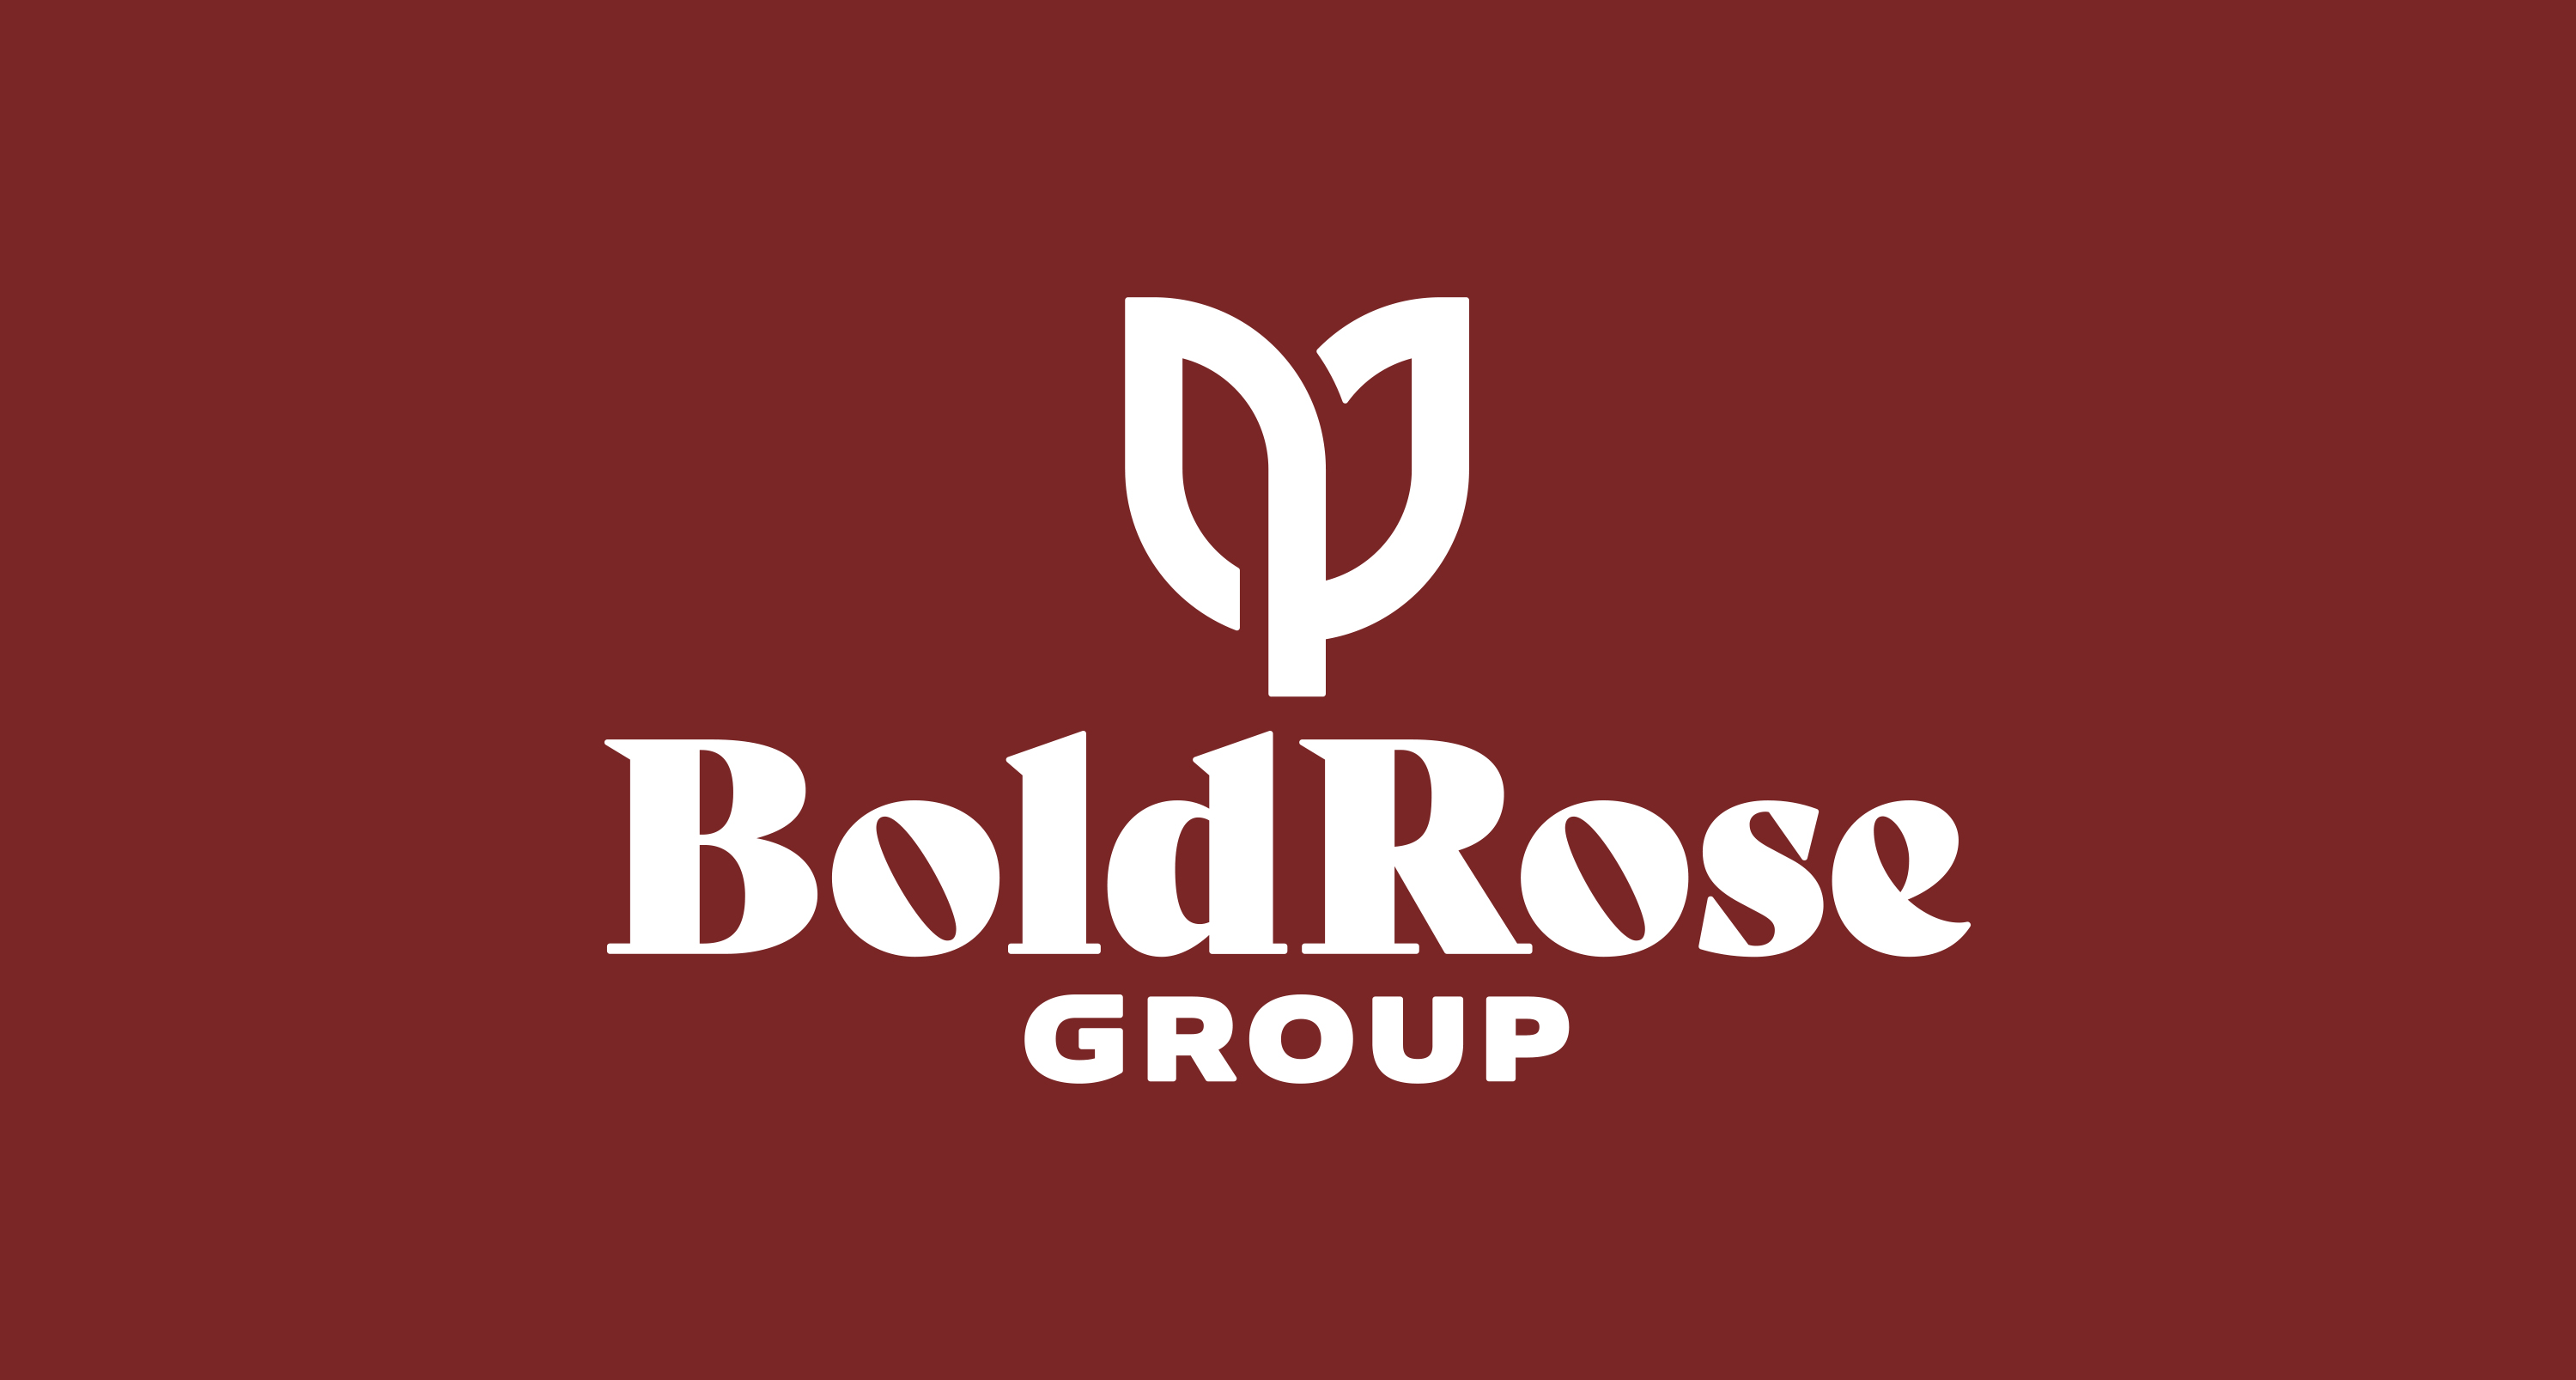 Bold Rose Group Brand Identity